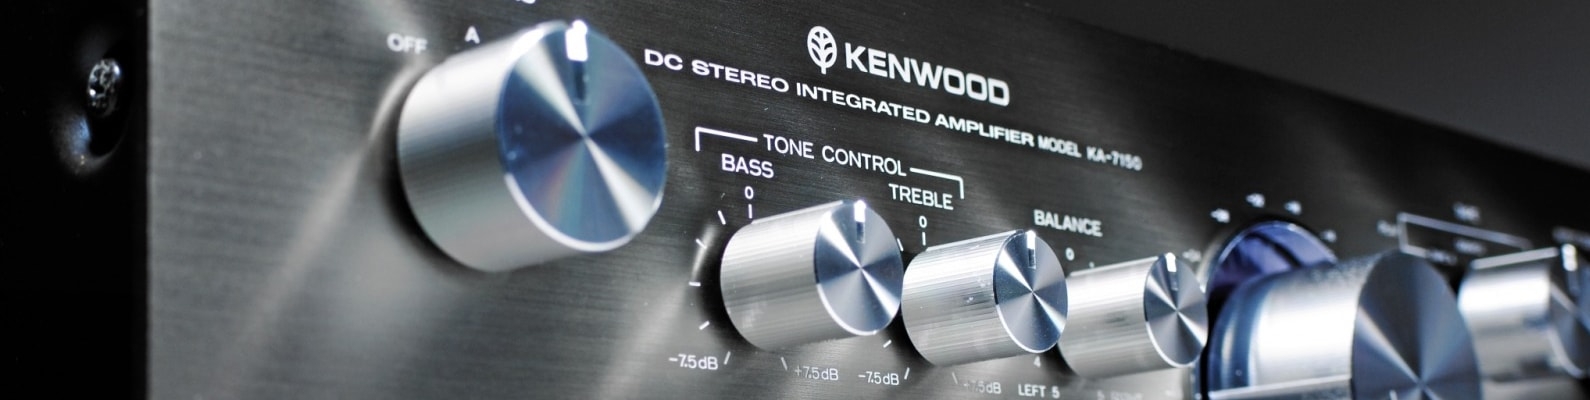 Amplifier, Kenwood KA 7150, Stereo